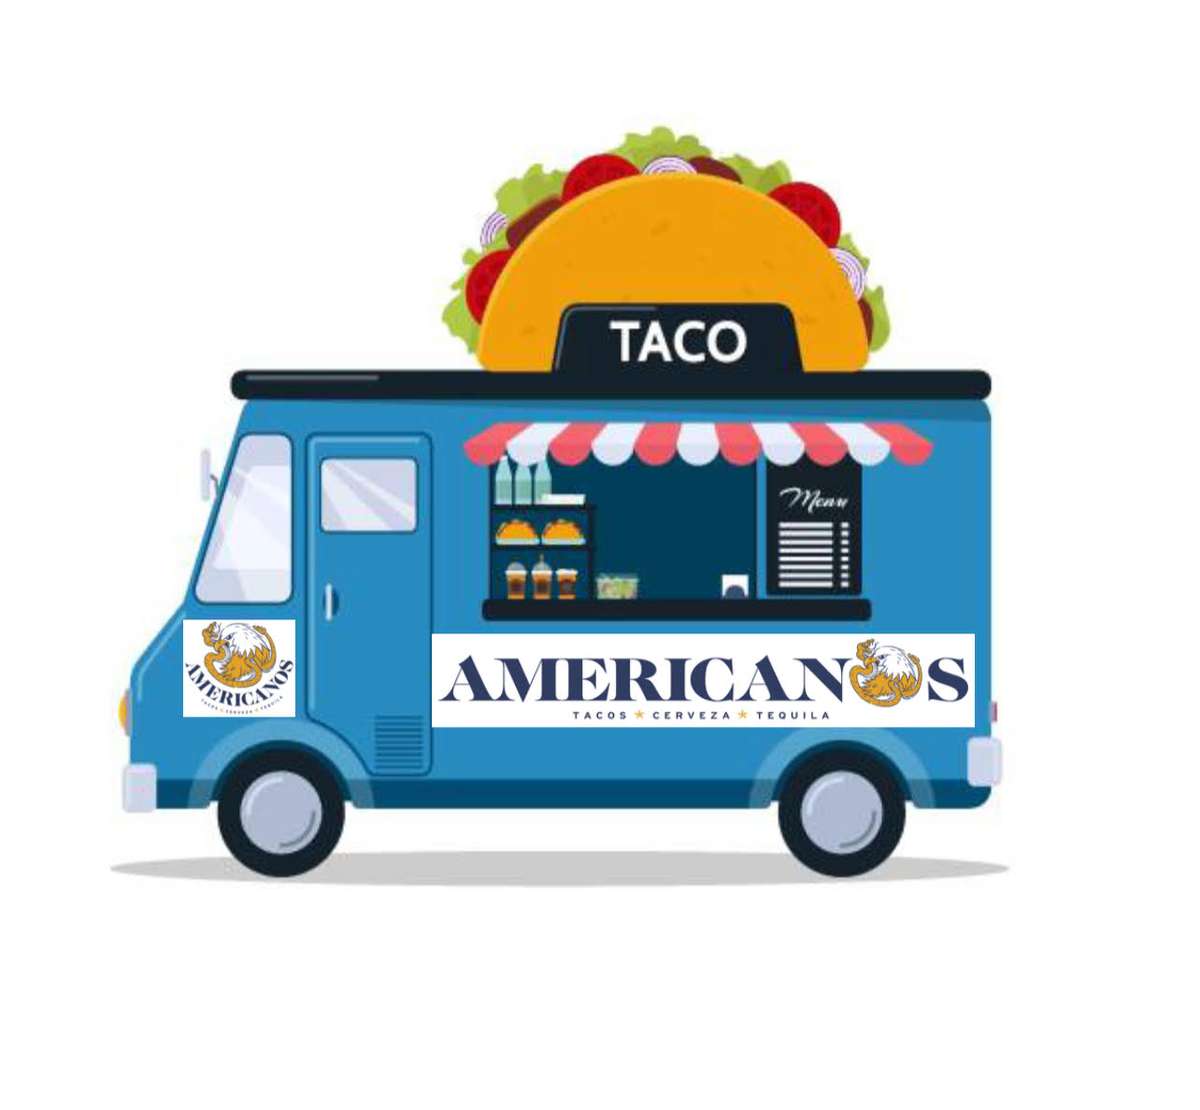 Americanos Food Truck Coming Soon...